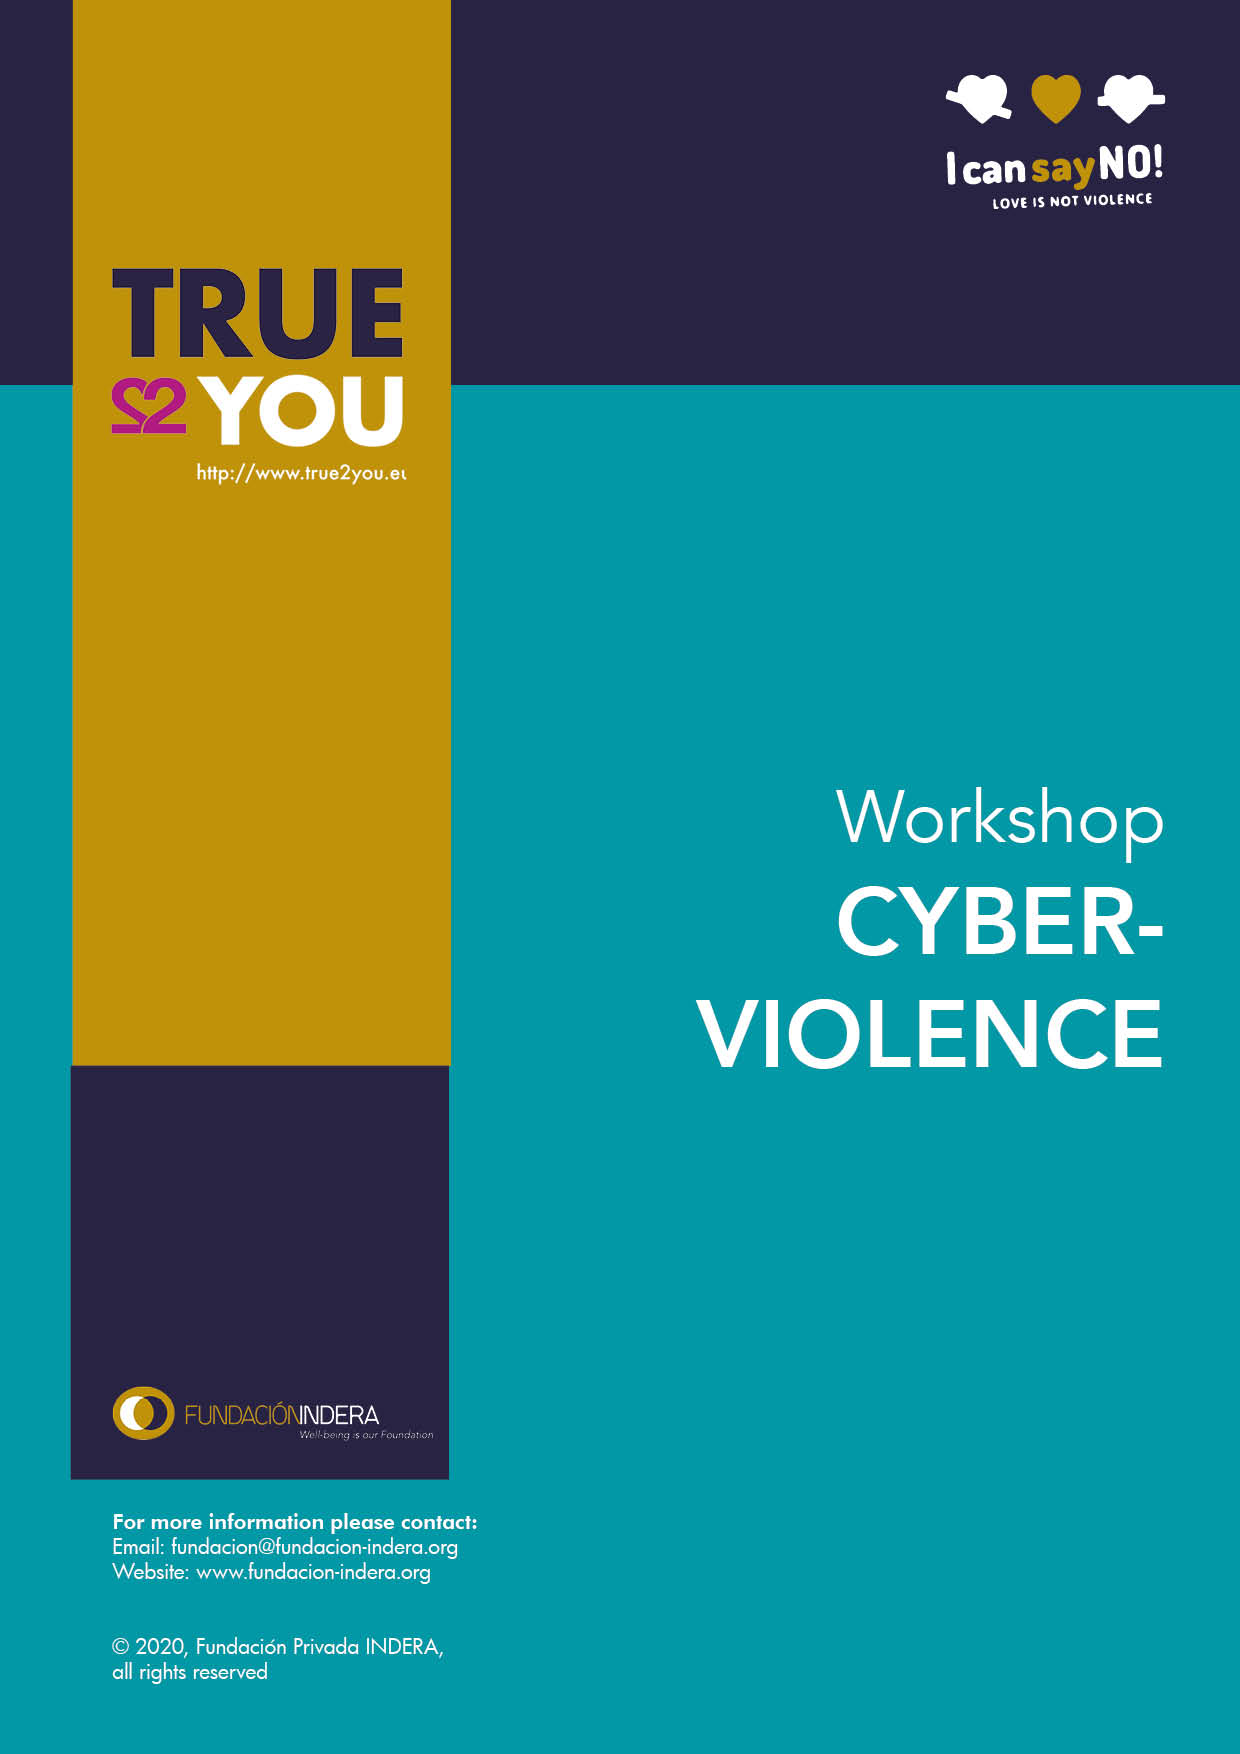 Workshop Cover Cyber Violence